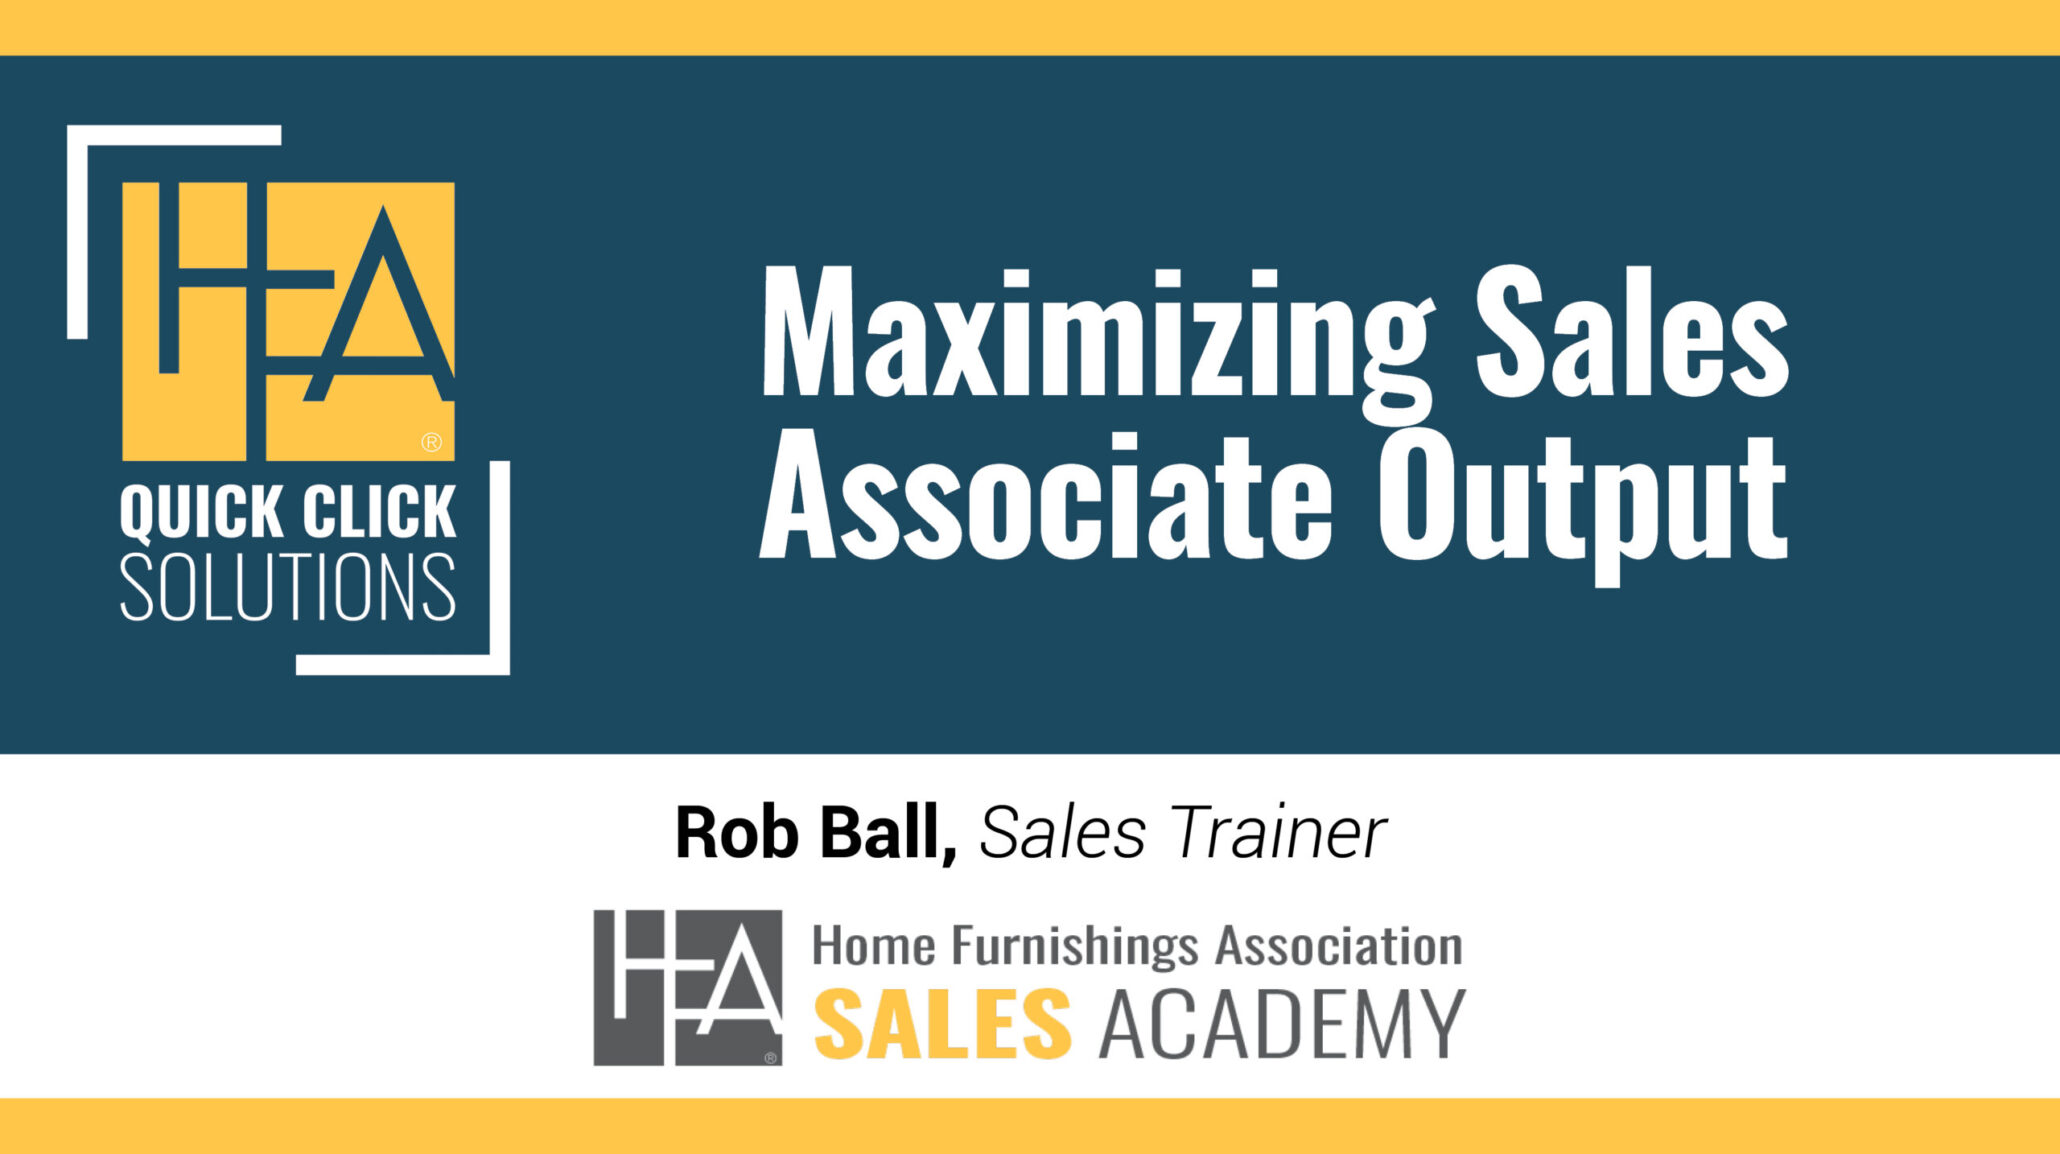 HFA_QCS_Maximizing Sales Associate Output